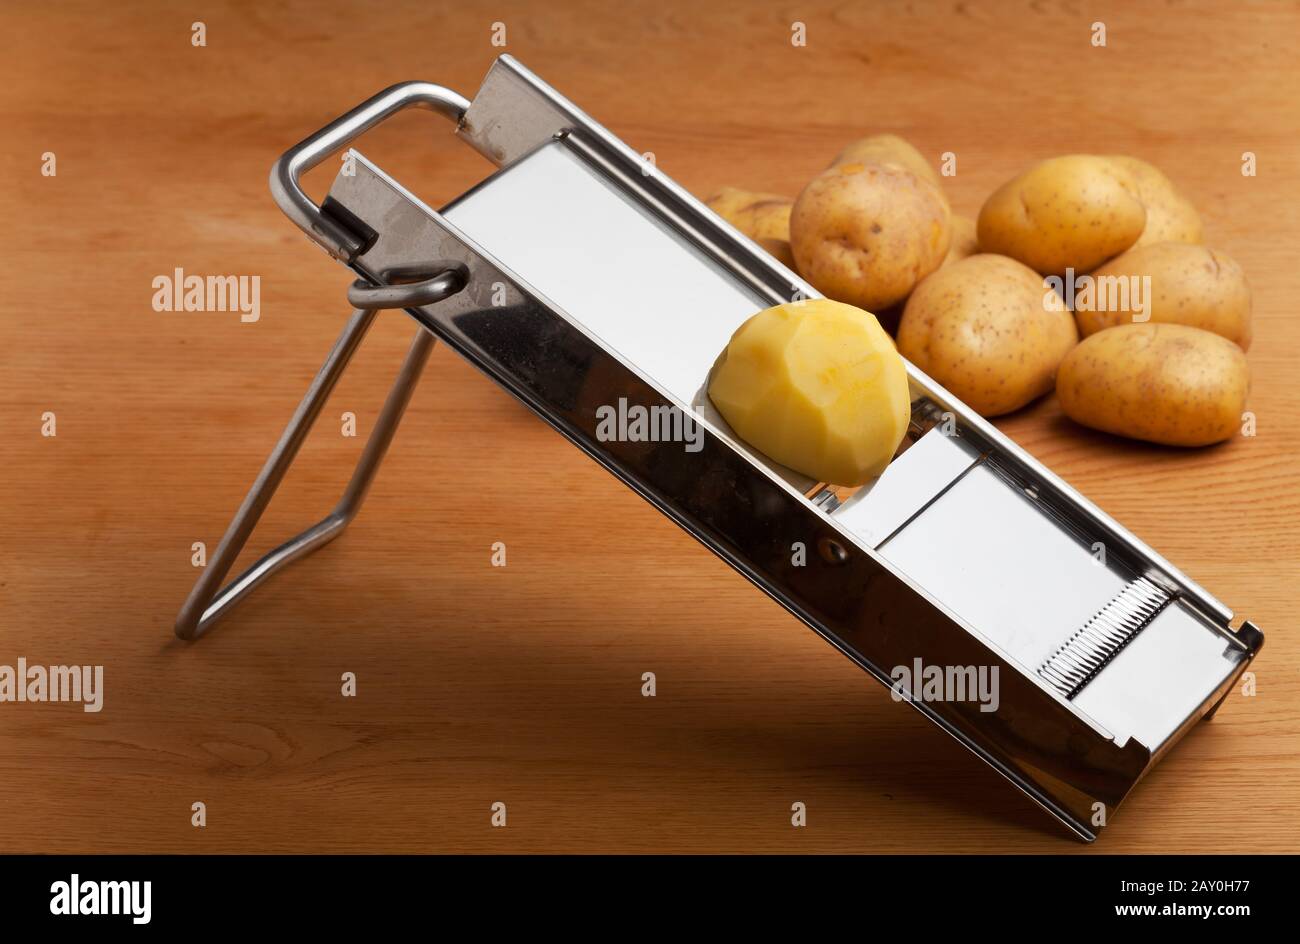 https://c8.alamy.com/comp/2AY0H77/half-a-potato-on-a-mandolin-2AY0H77.jpg